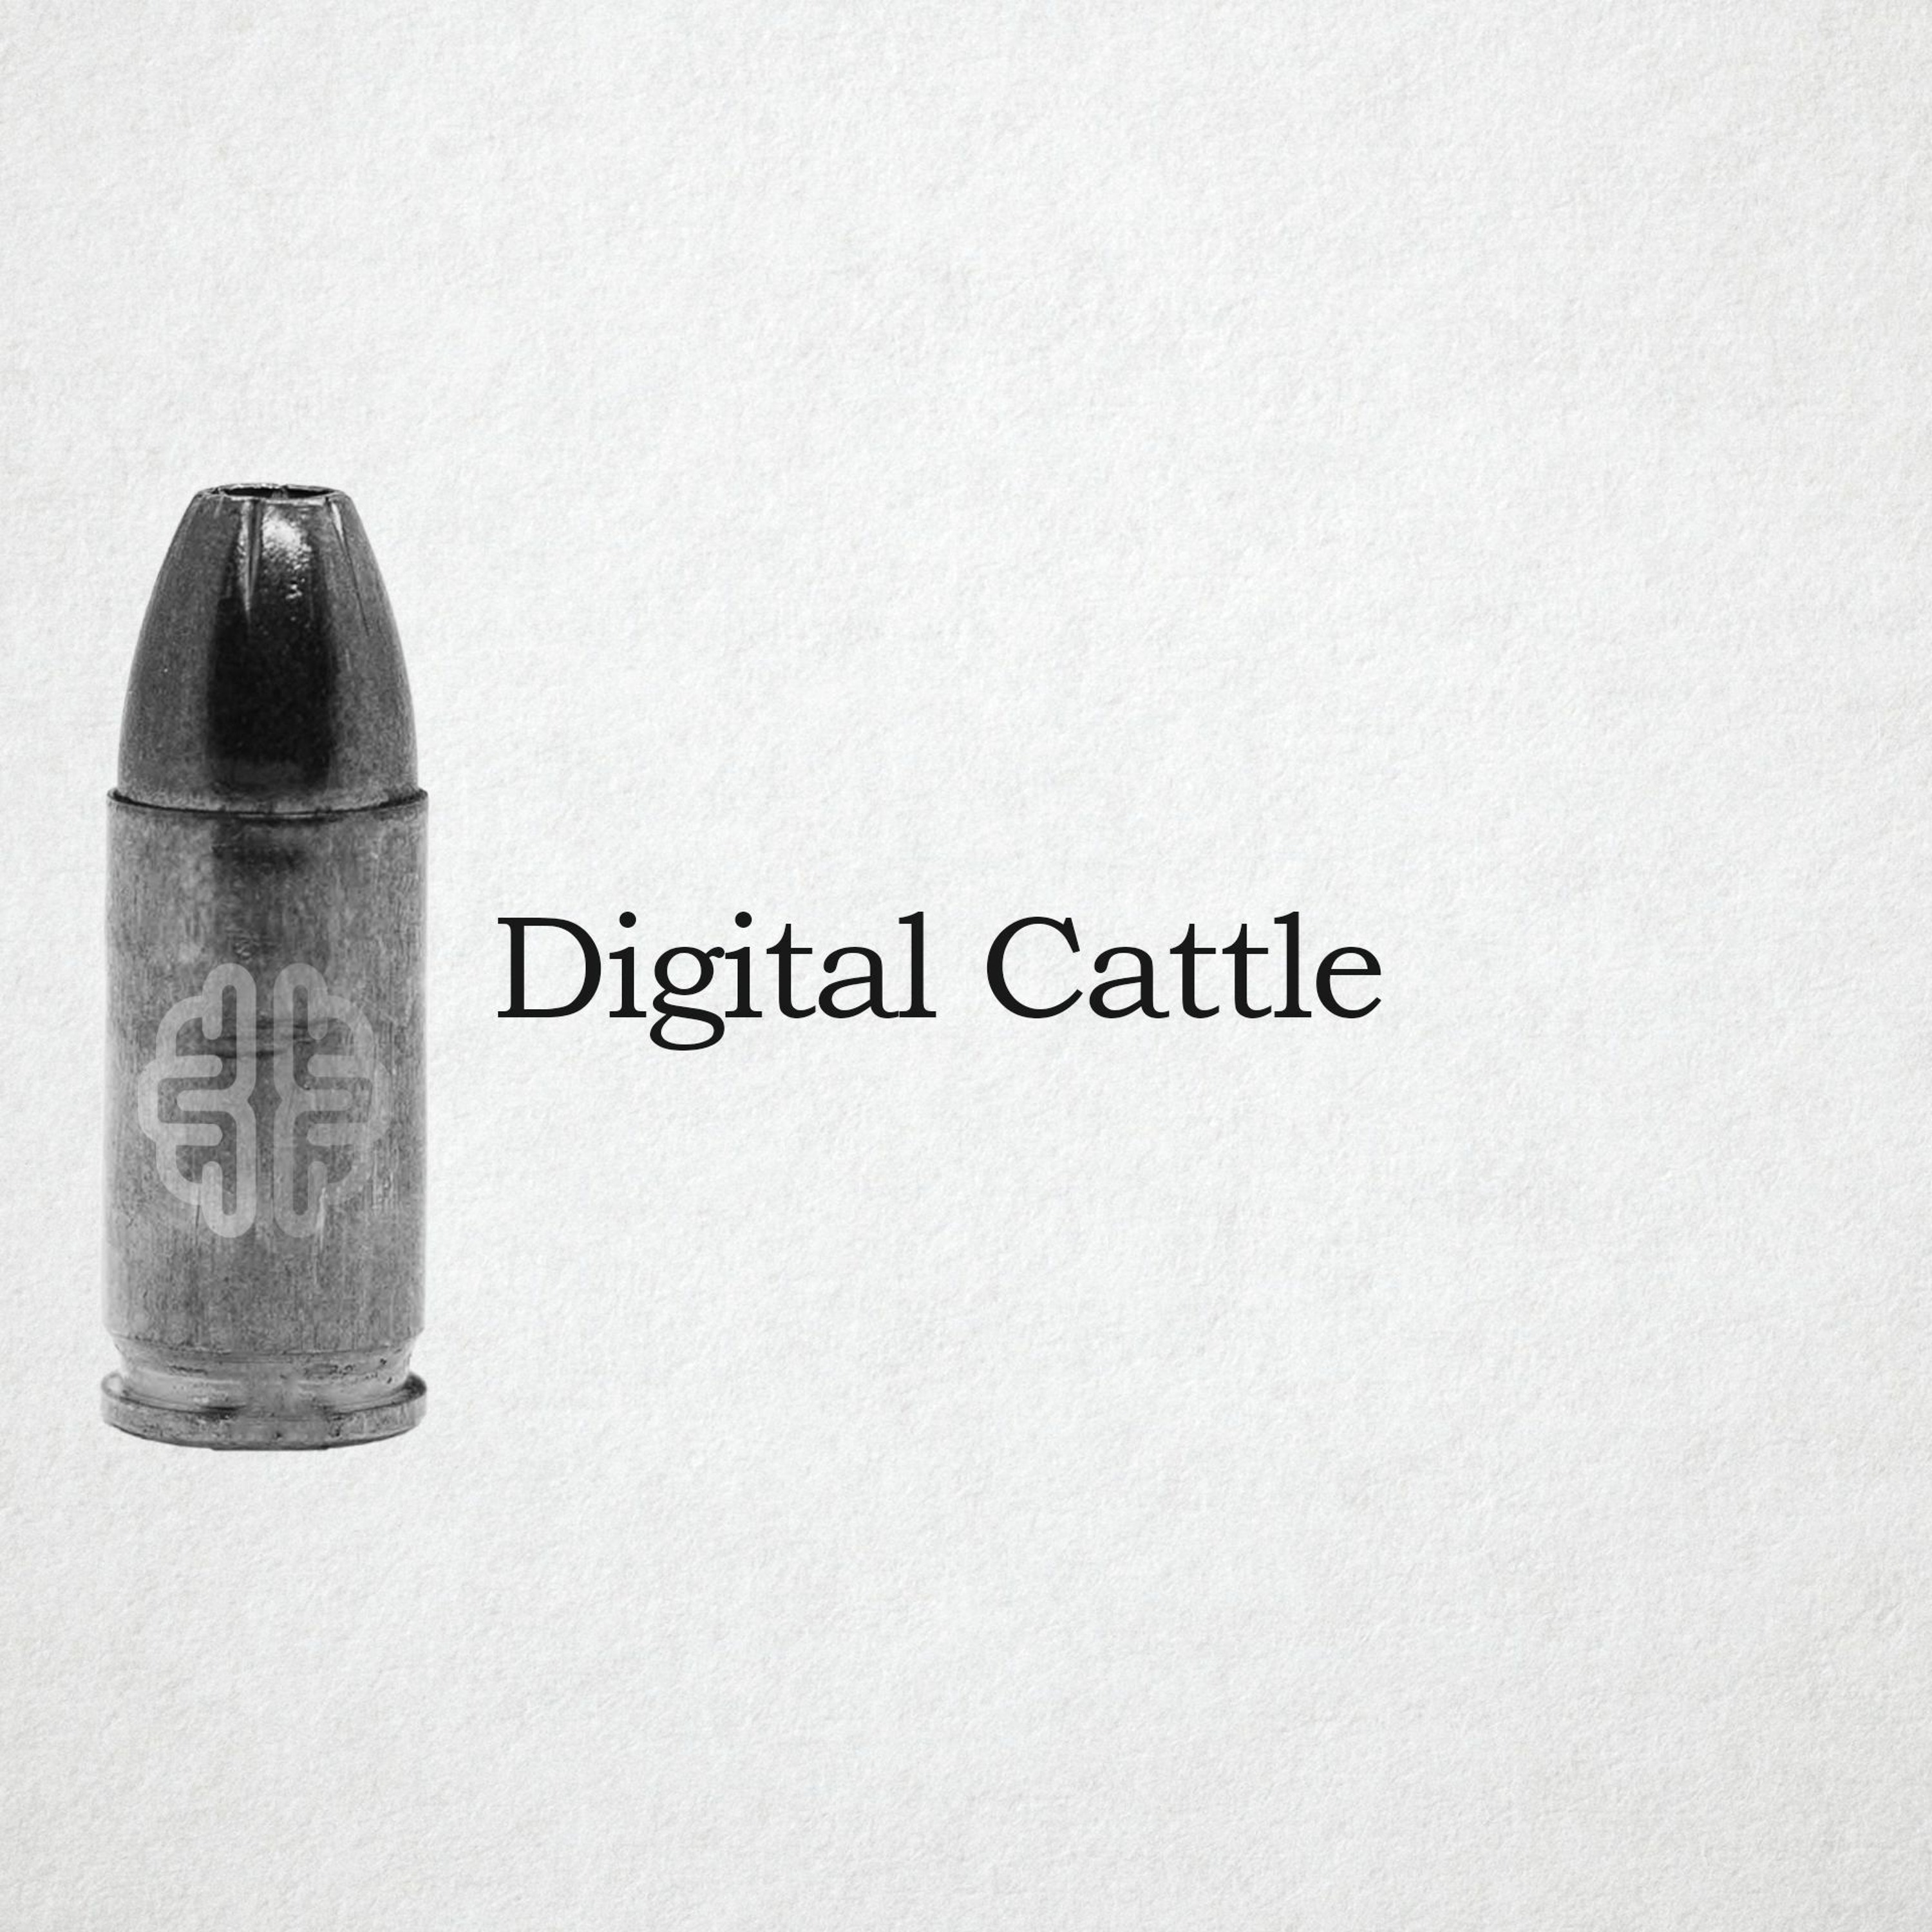 Digital Cattle